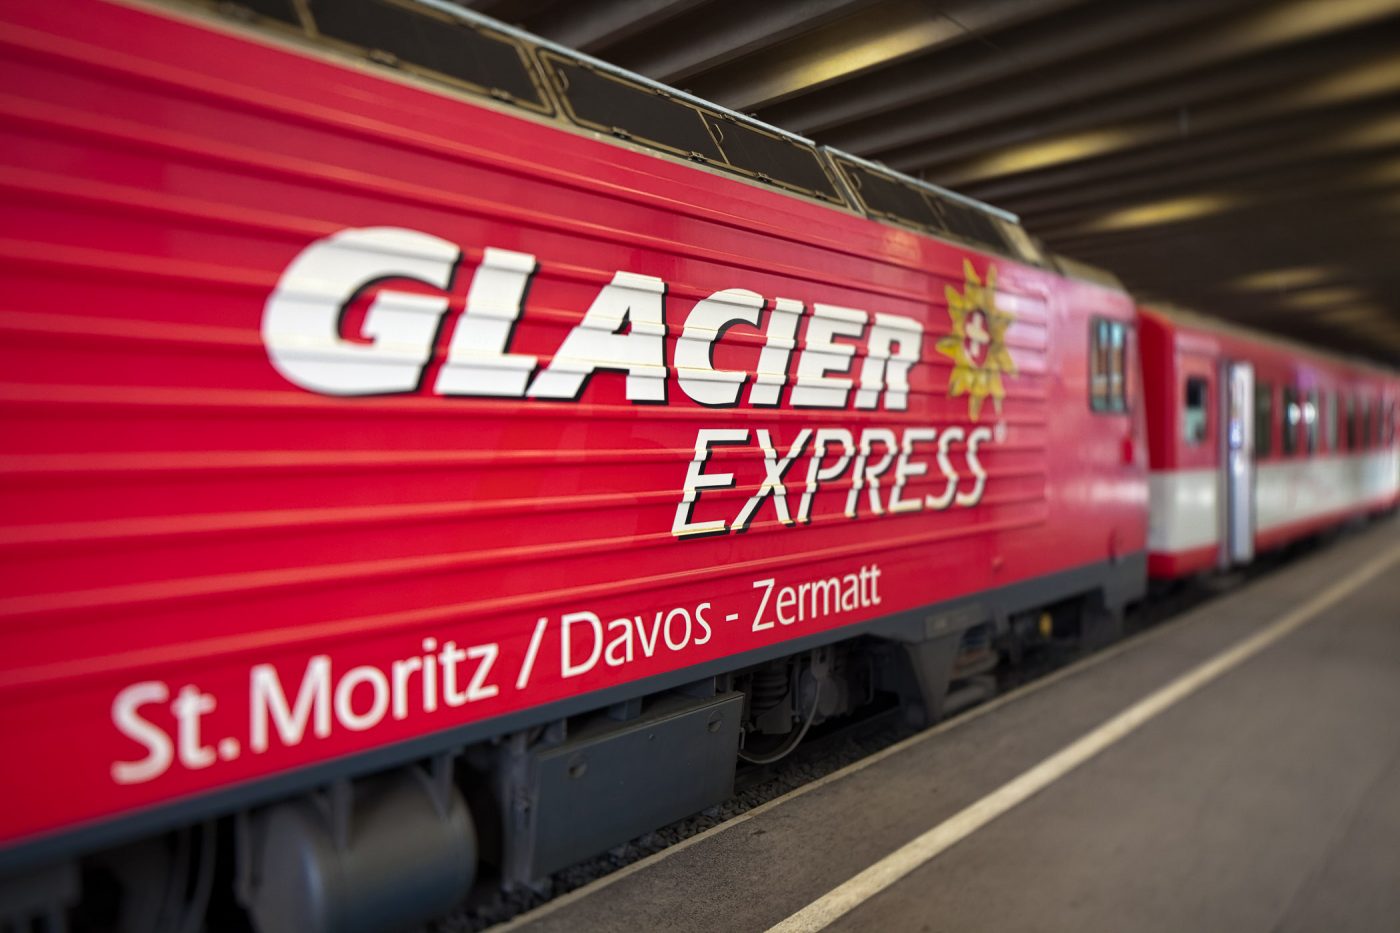 Glacier Express (Zermatt)